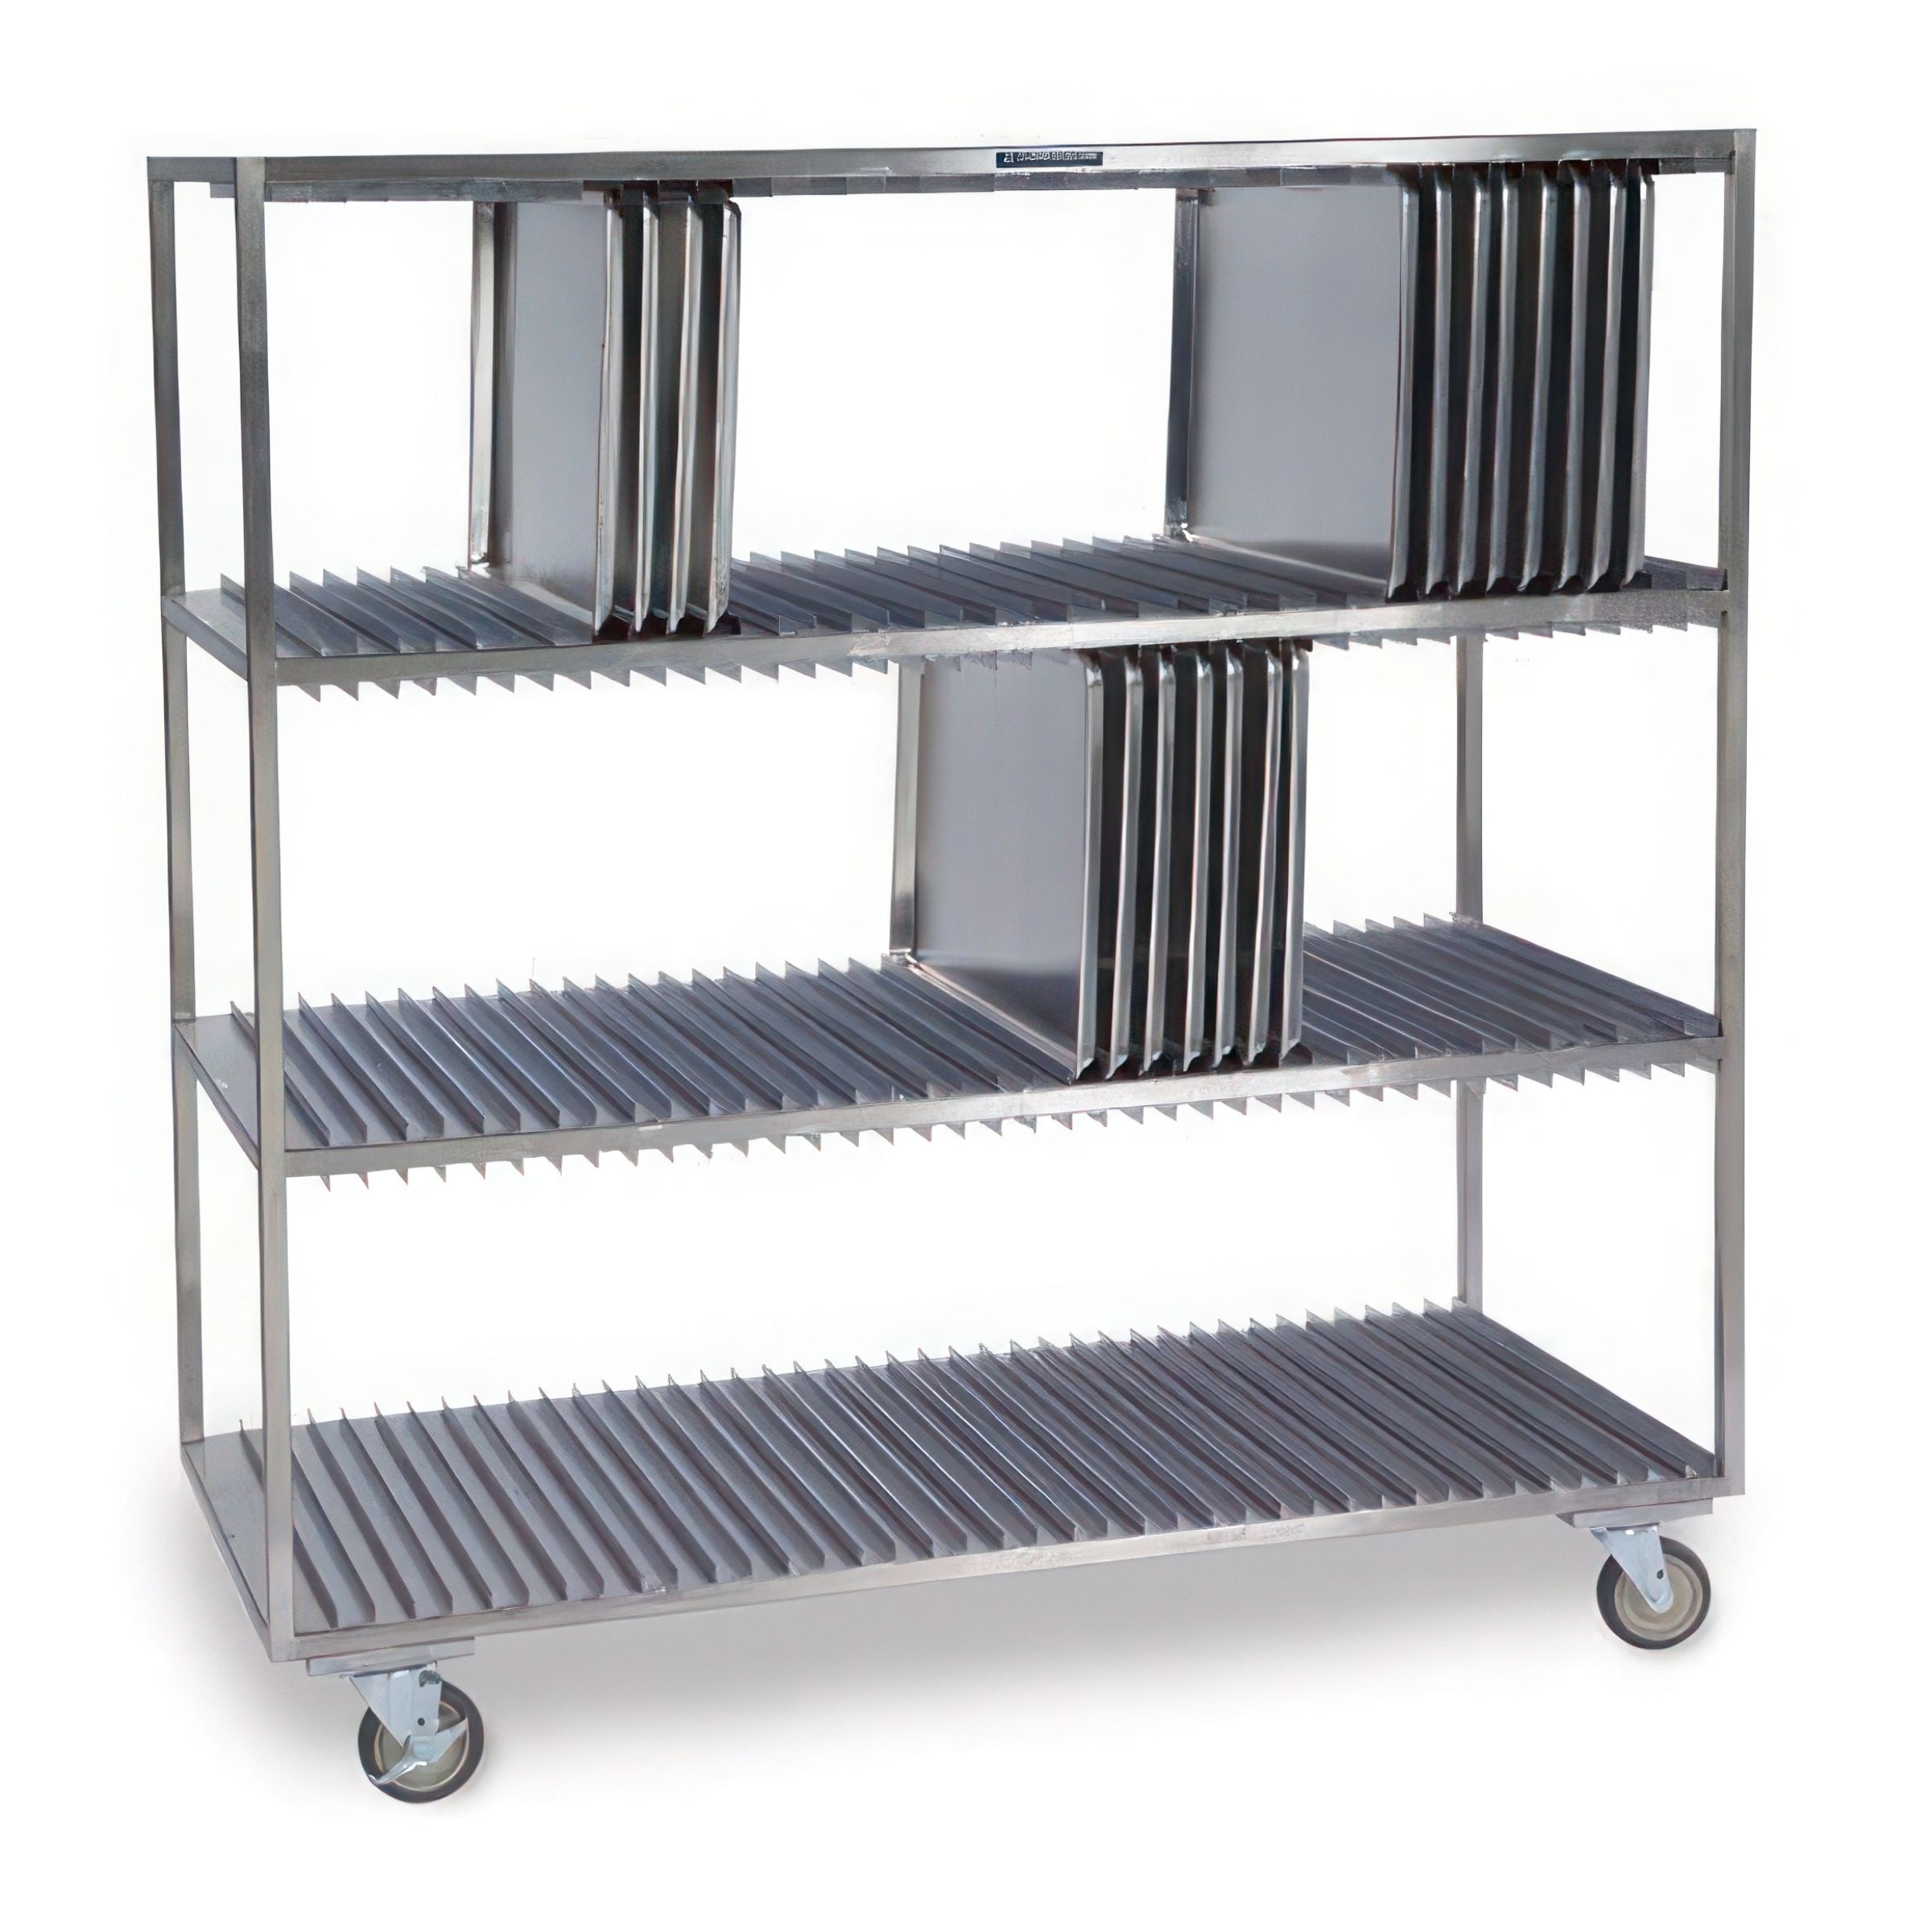 Pan Storage Racks, Shelving, Racks & Carts